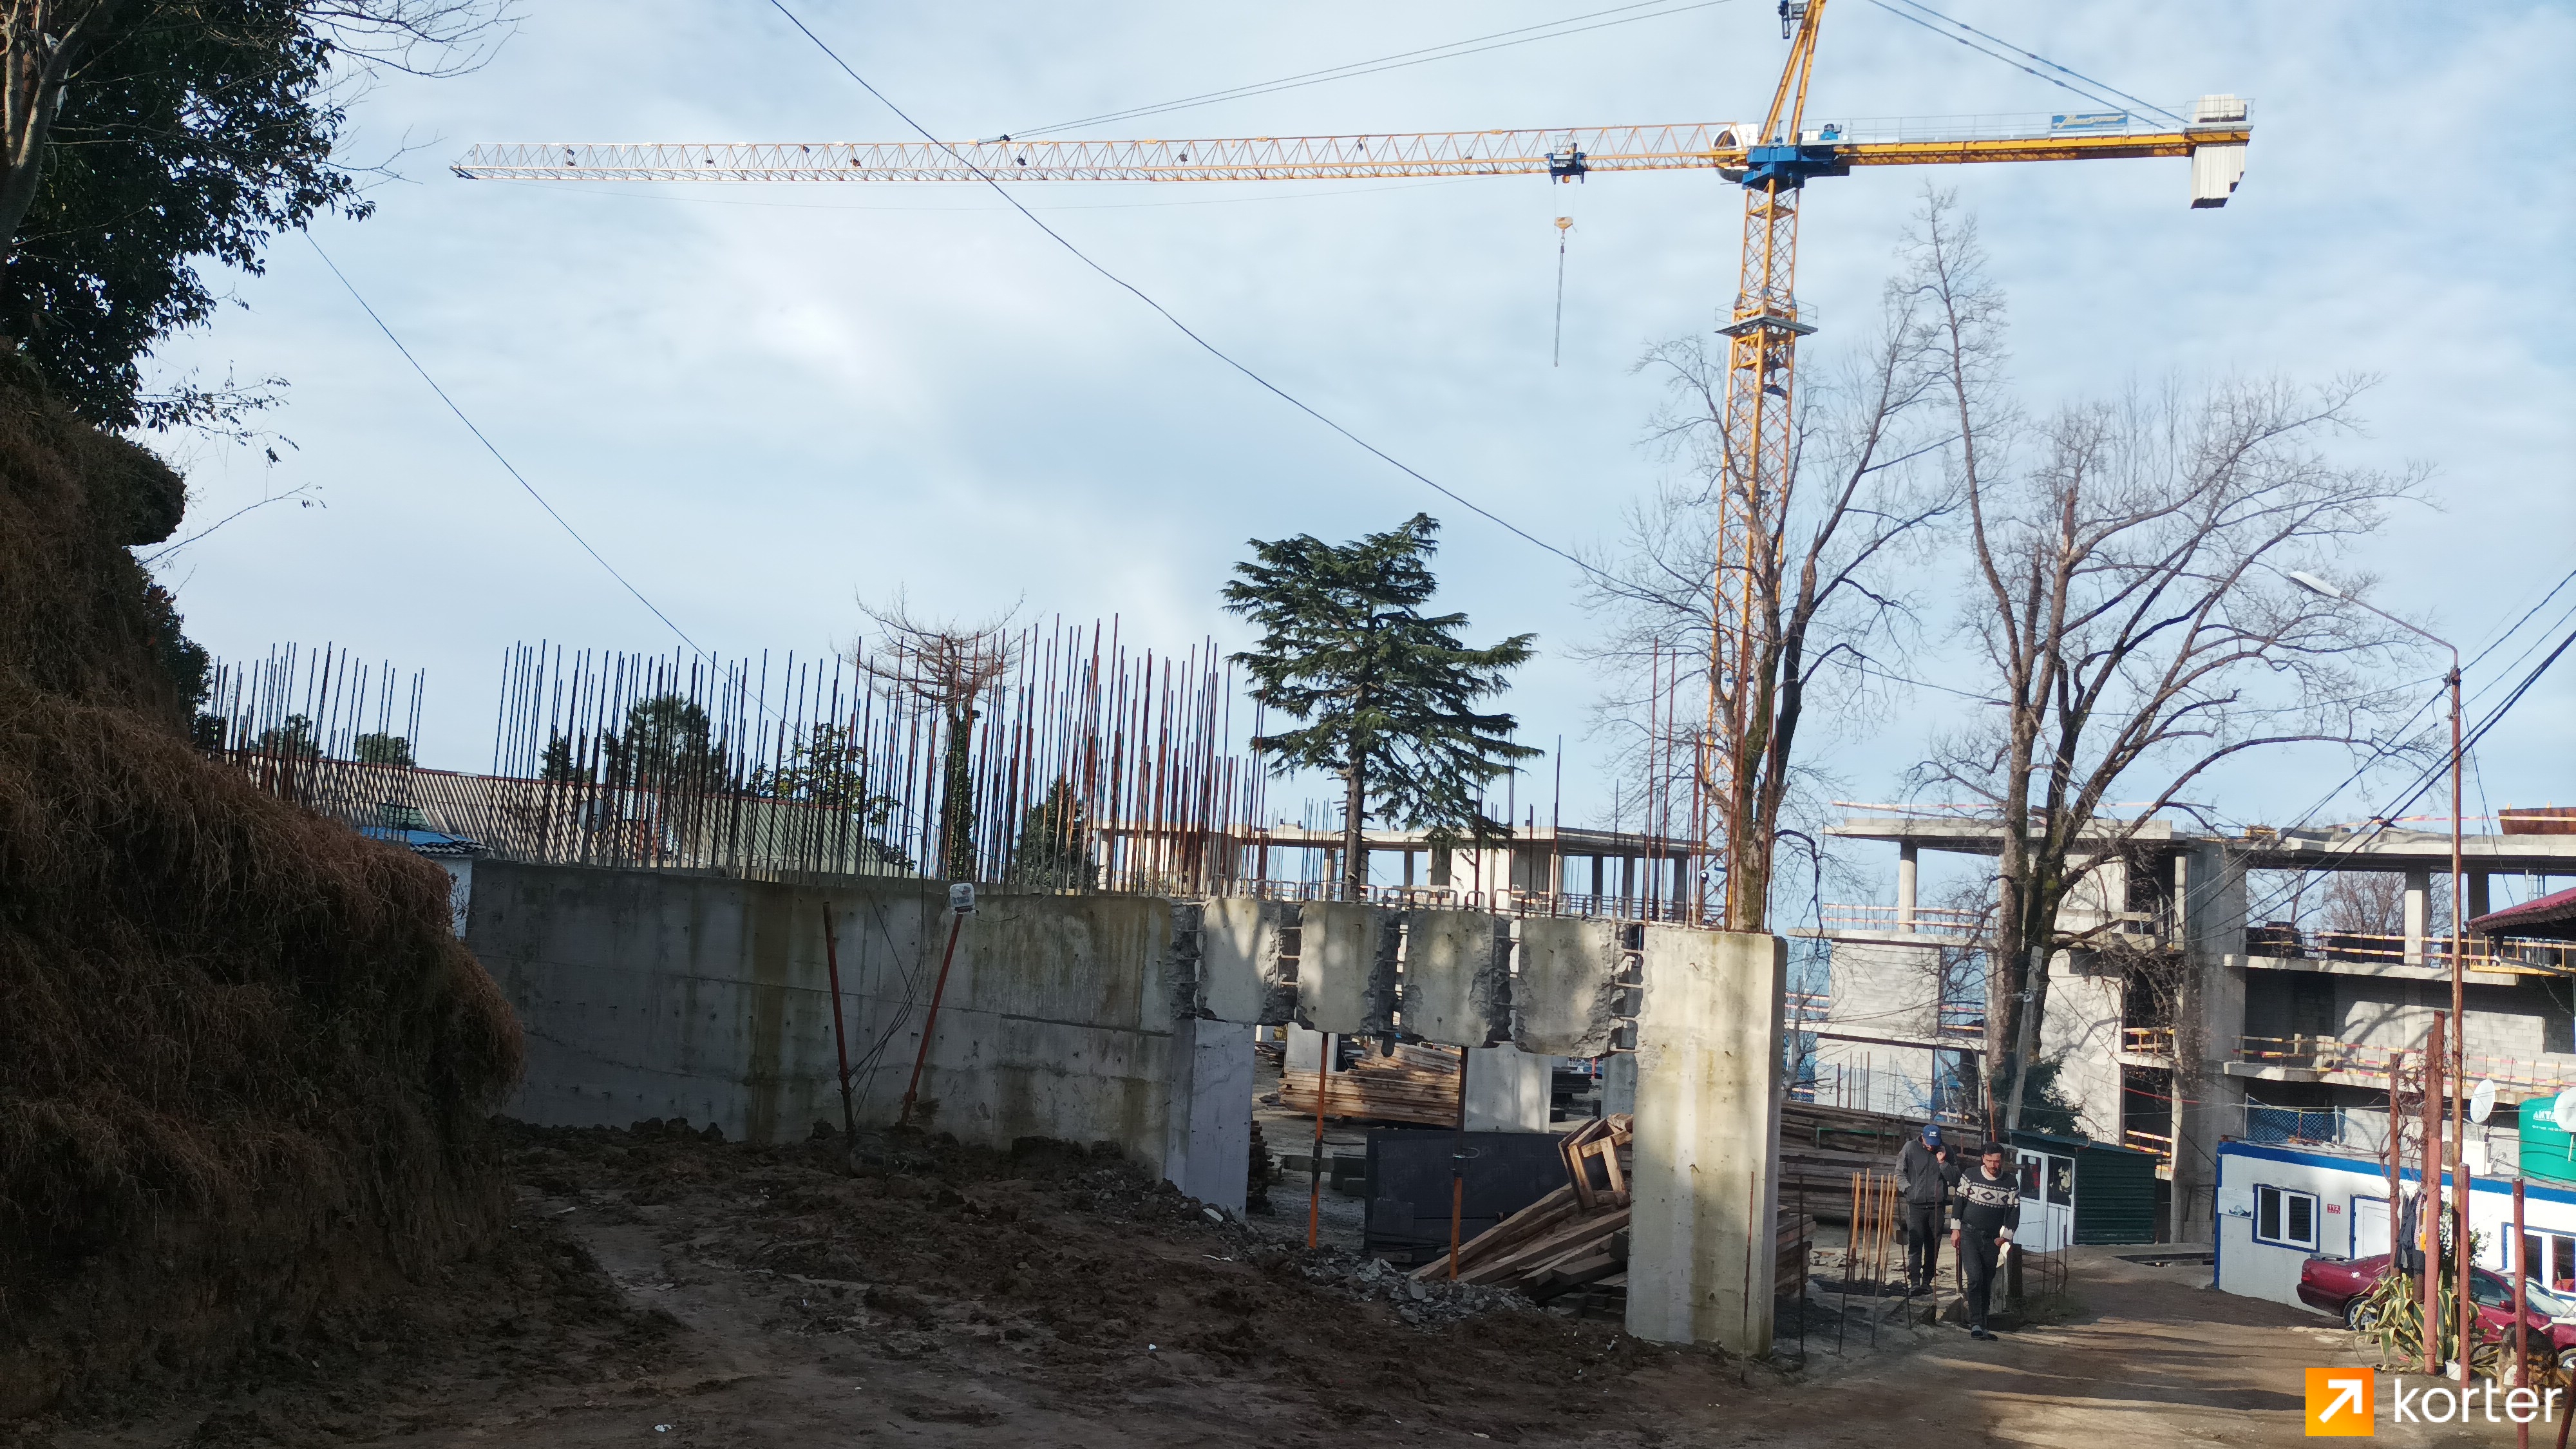 Construction progress Chateau Del Mar - Angle 1, February 2022